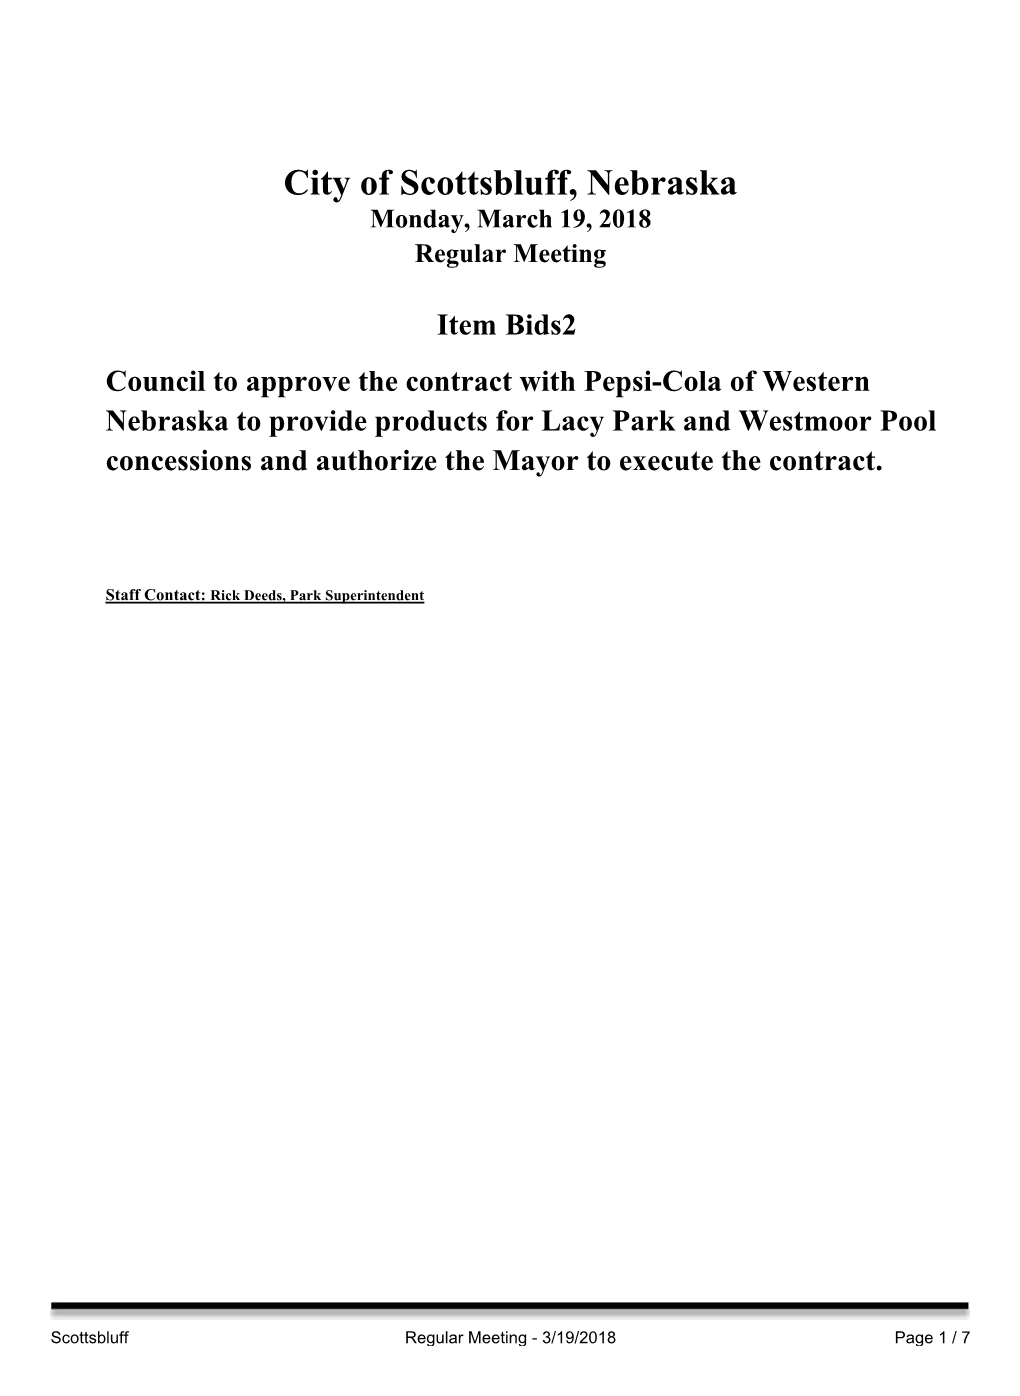 City of Scottsbluff, Nebraska Monday, March 19, 2018 Regular Meeting